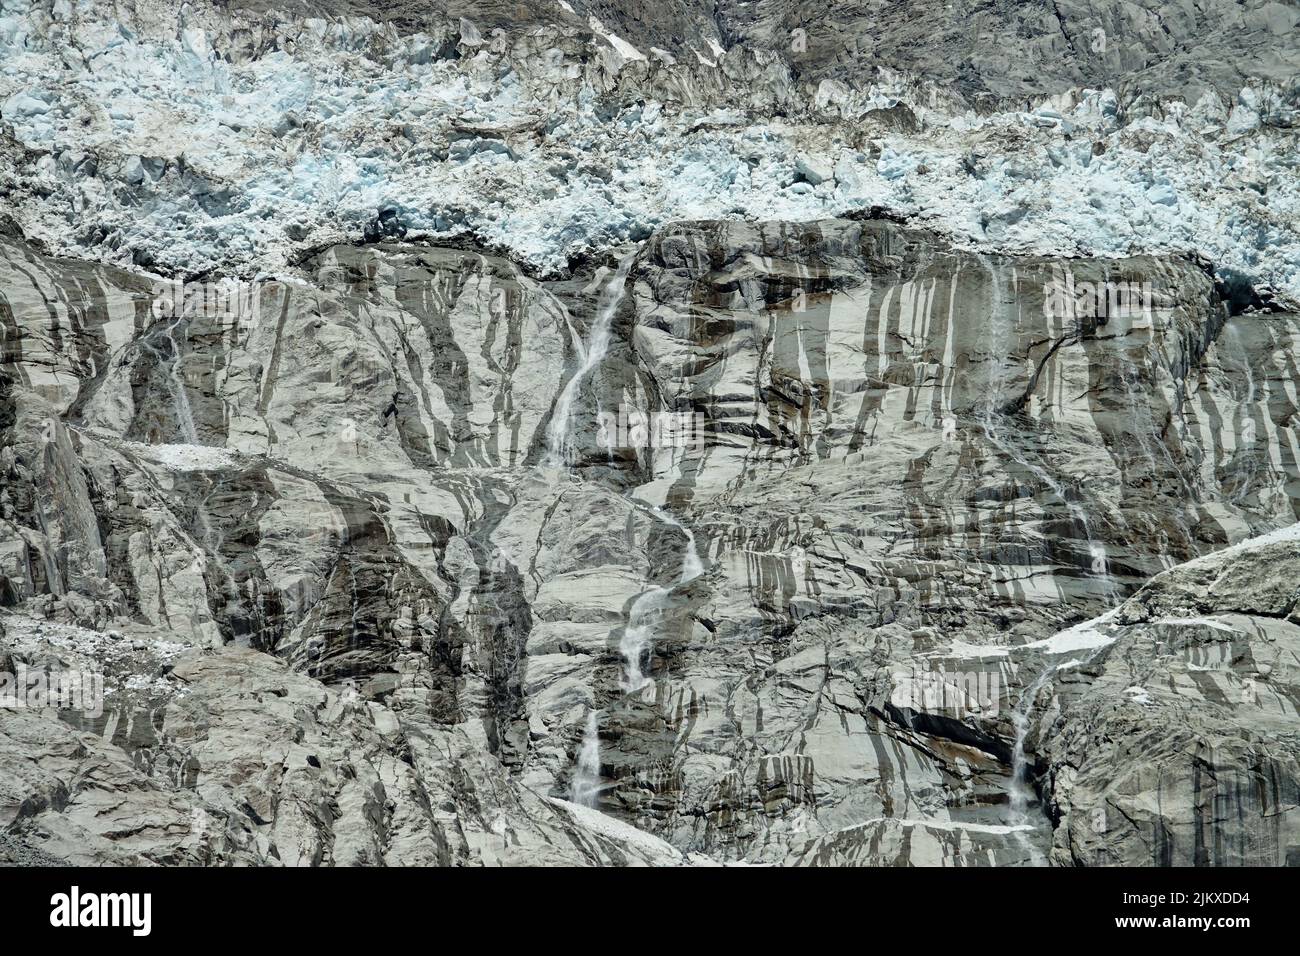 Cambio climático. Vista del glaciar Brenva que se derrite creando grandes cascadas. Courmayeur, Italia Foto de stock